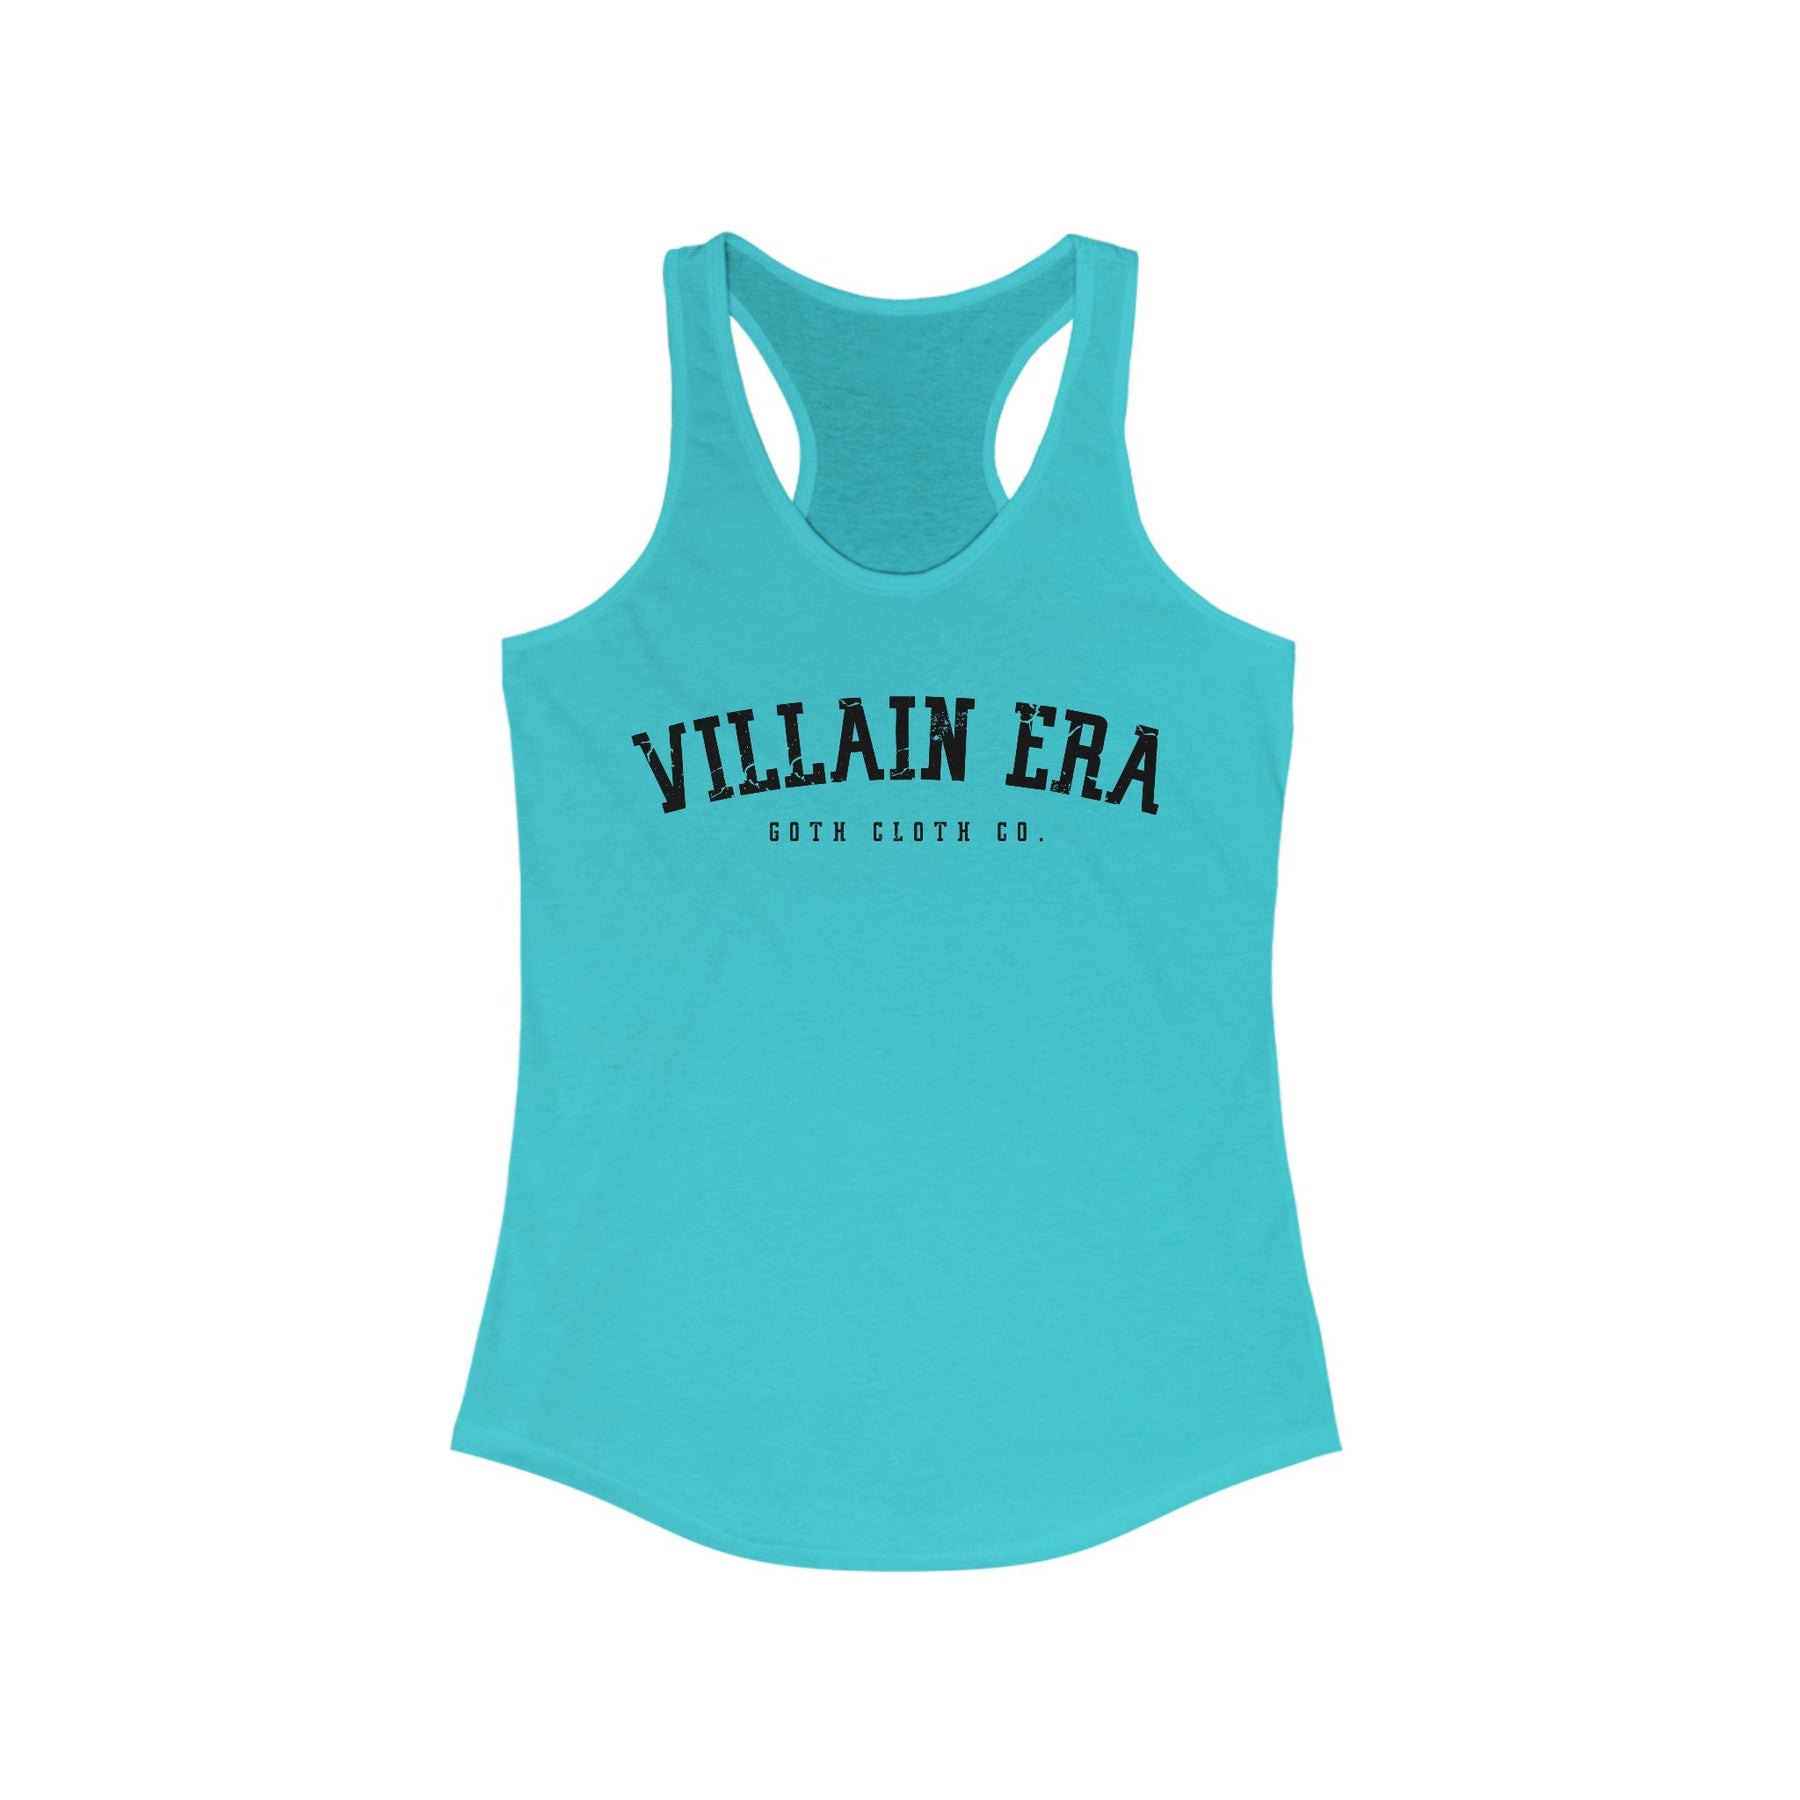 Villain Era Women's Racerback Tank - Goth Cloth Co.Tank Top31166960904219171495